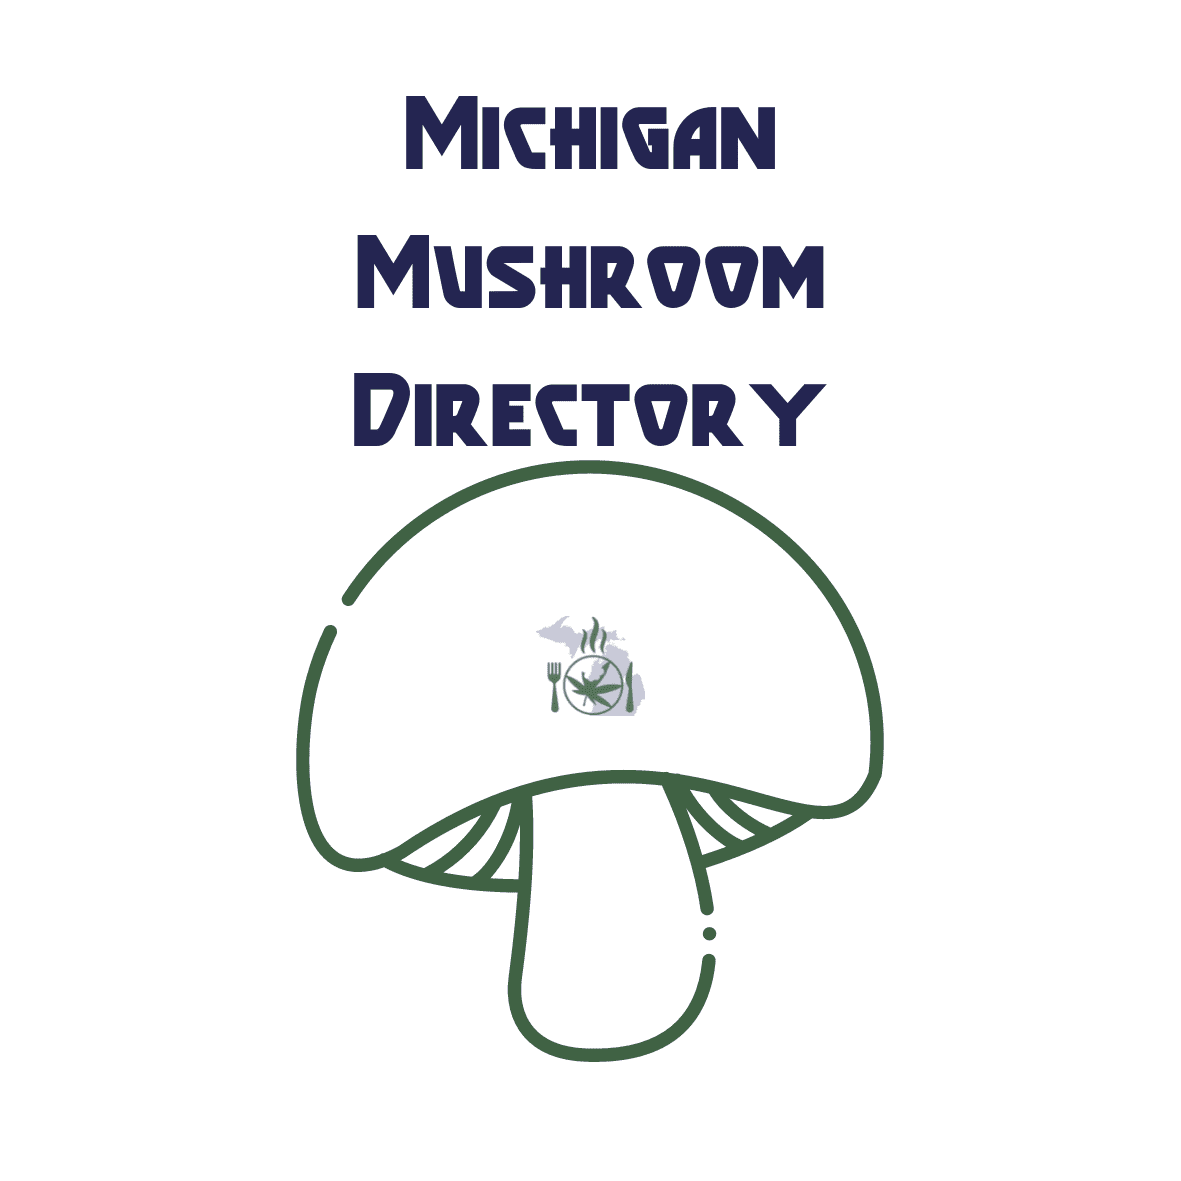 Michigan Mushroom Co